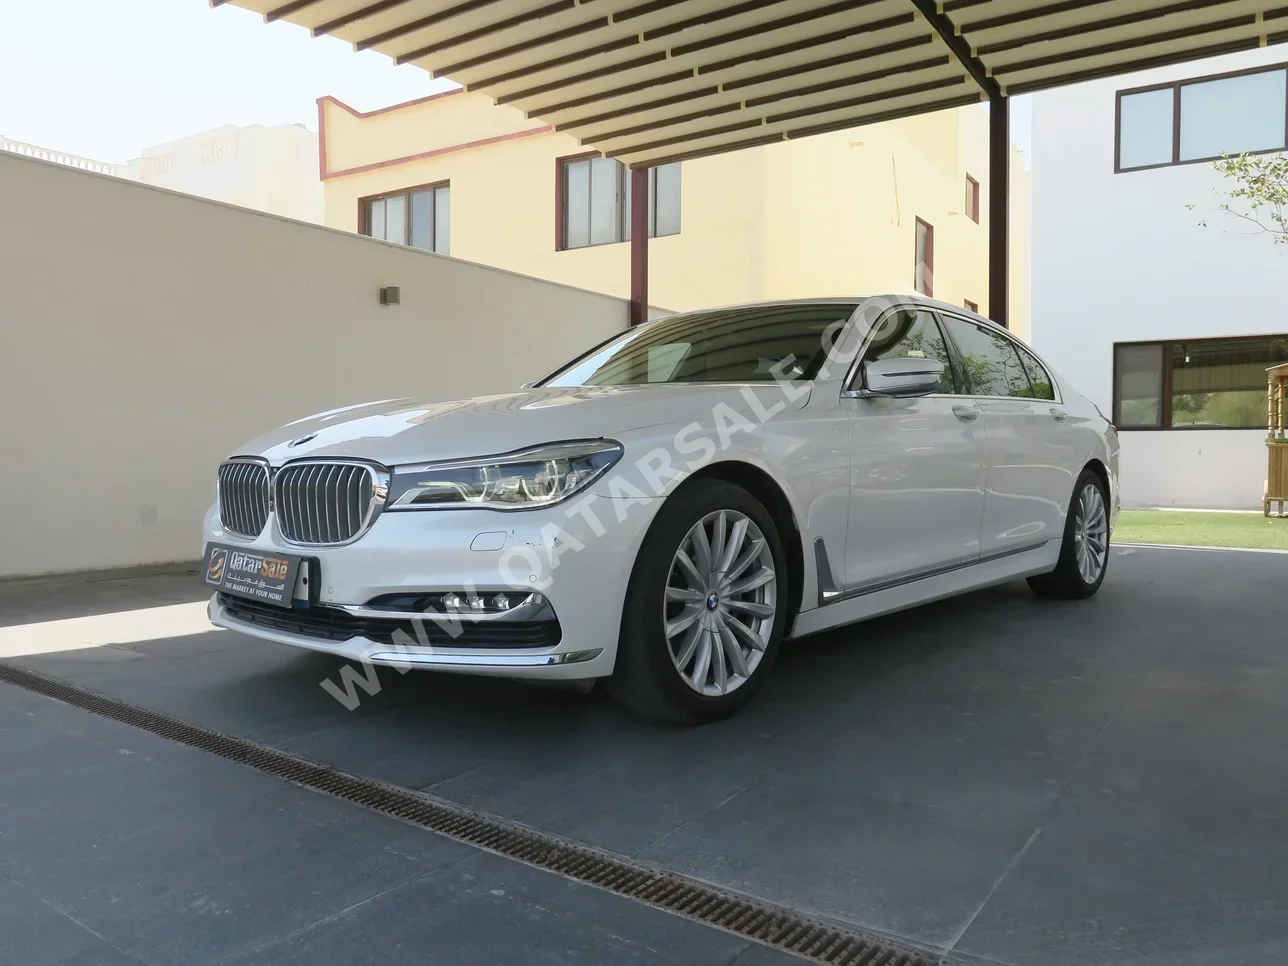 BMW  7-Series  730 Li  2017  Automatic  74,000 Km  4 Cylinder  Rear Wheel Drive (RWD)  Sedan  White